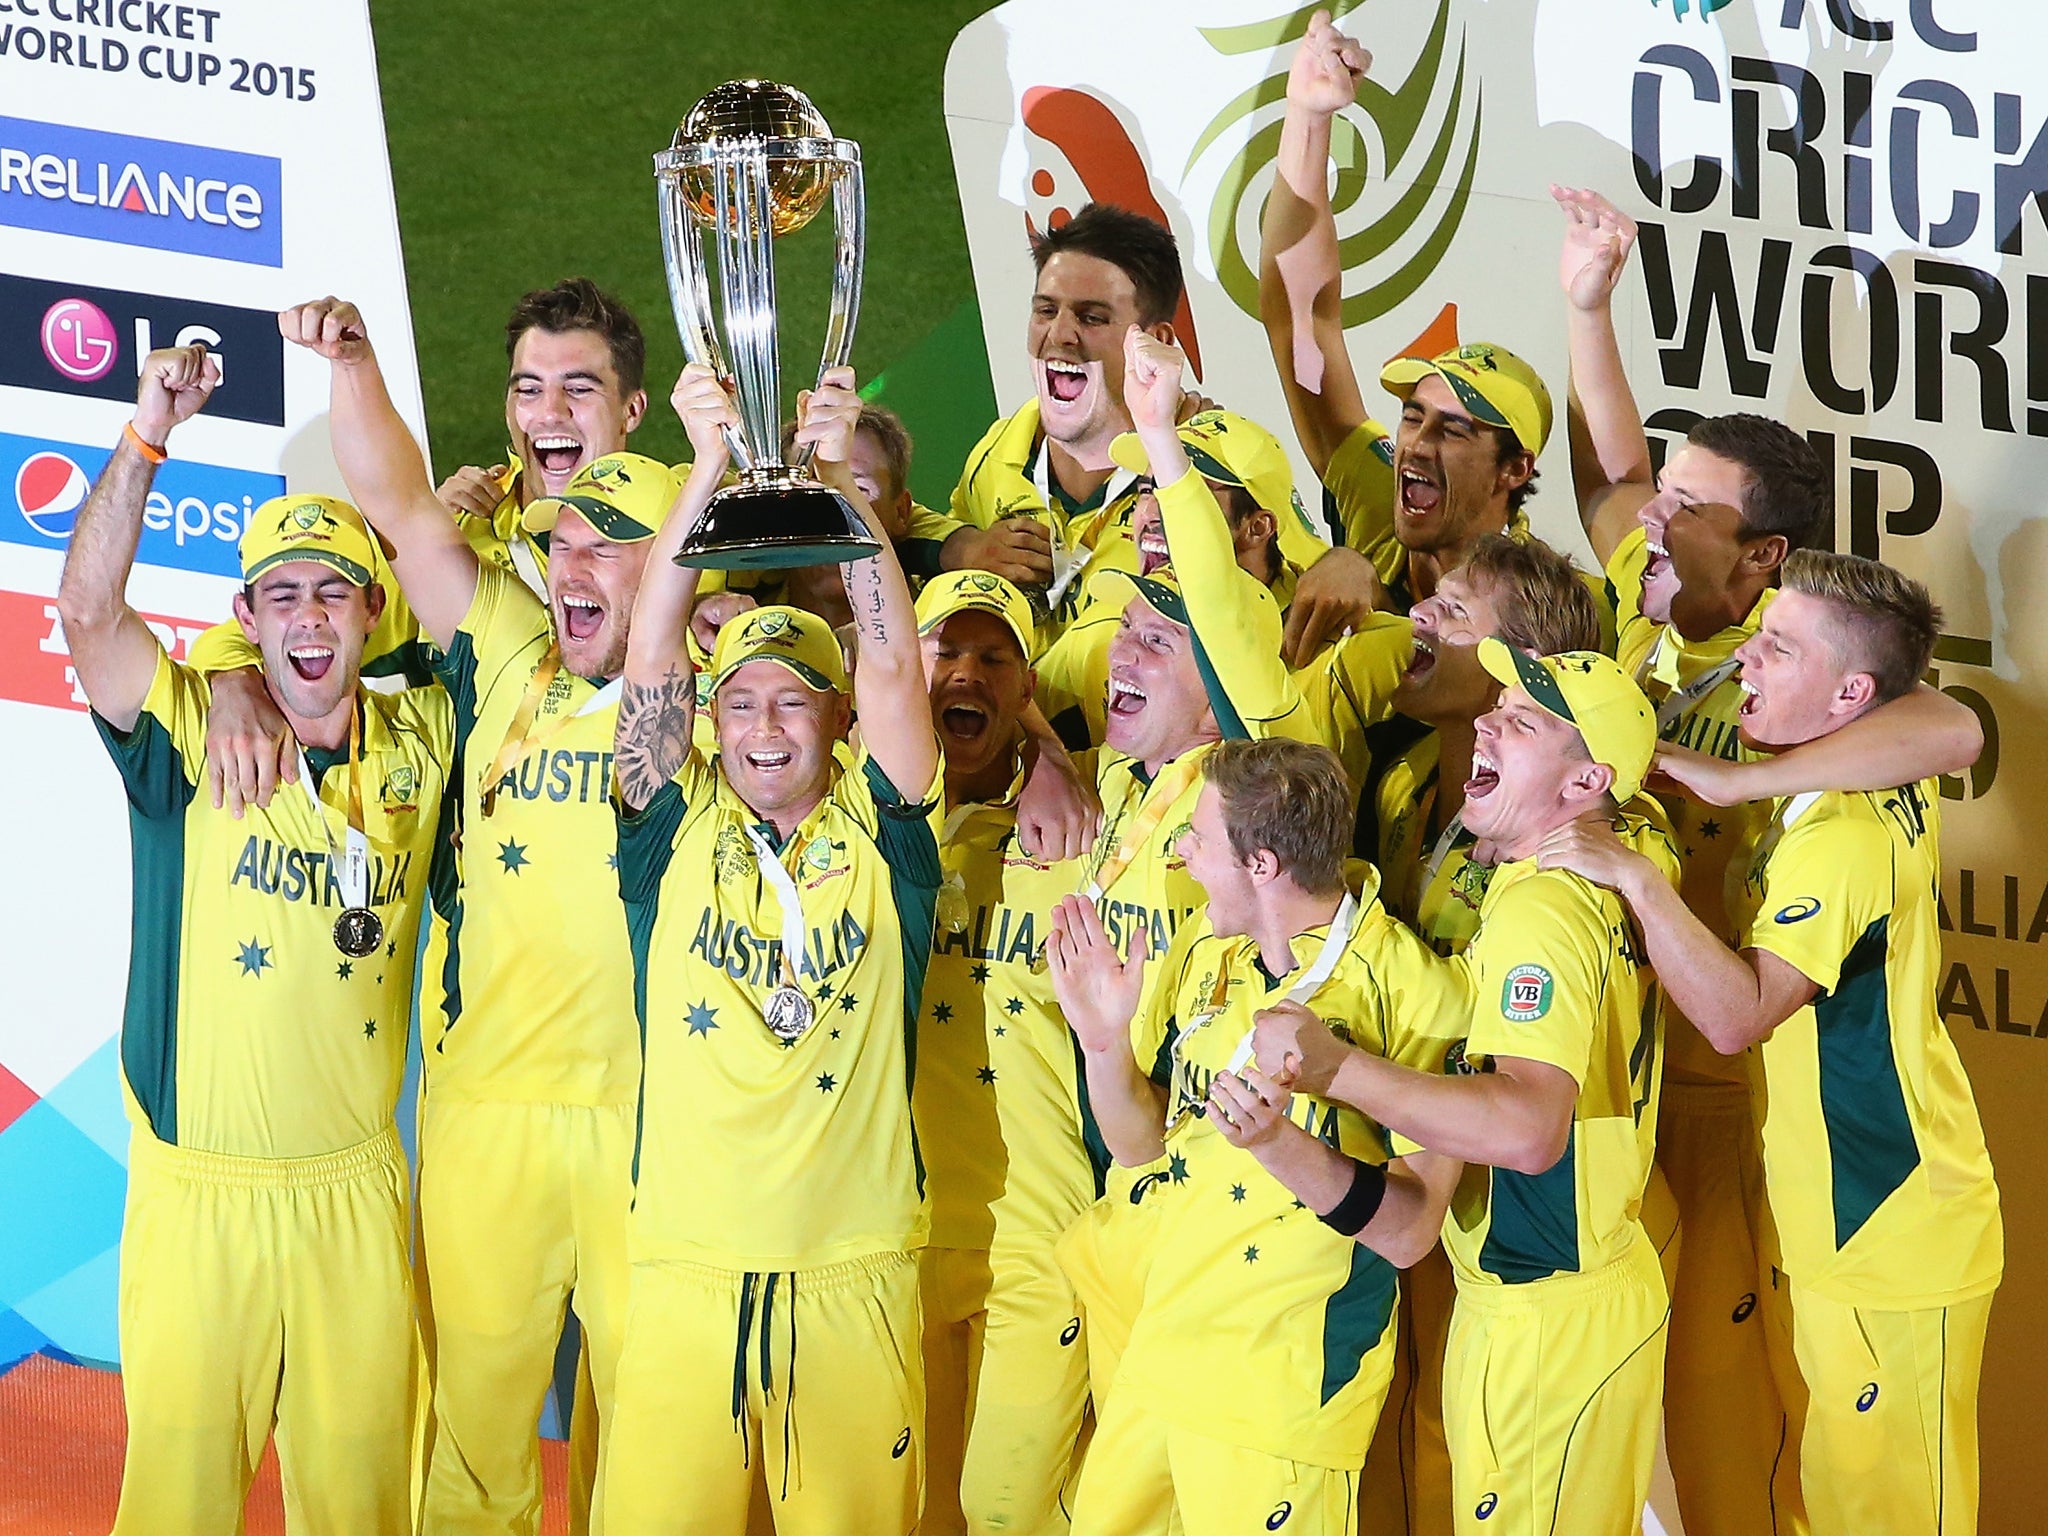 Cricket World Cup 2015 final LIVE: Australia vs New Zealand - Australia